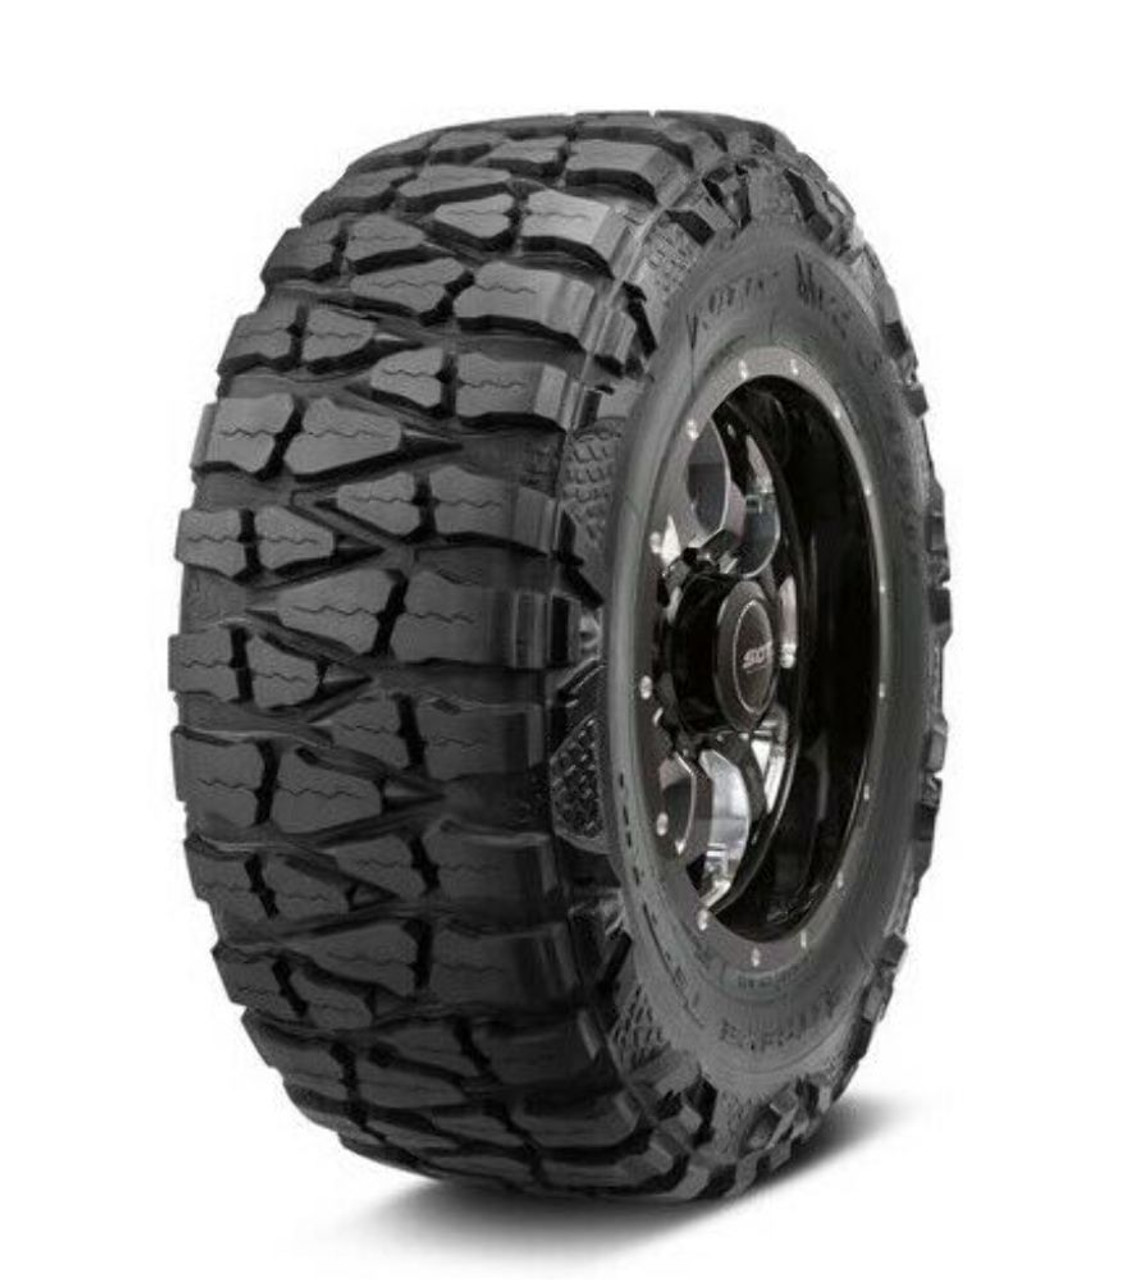 40X15.50R22LT D Set 4 Nitto Mud Grappler Mud Terrain Tires 127Q 39.7 40155022